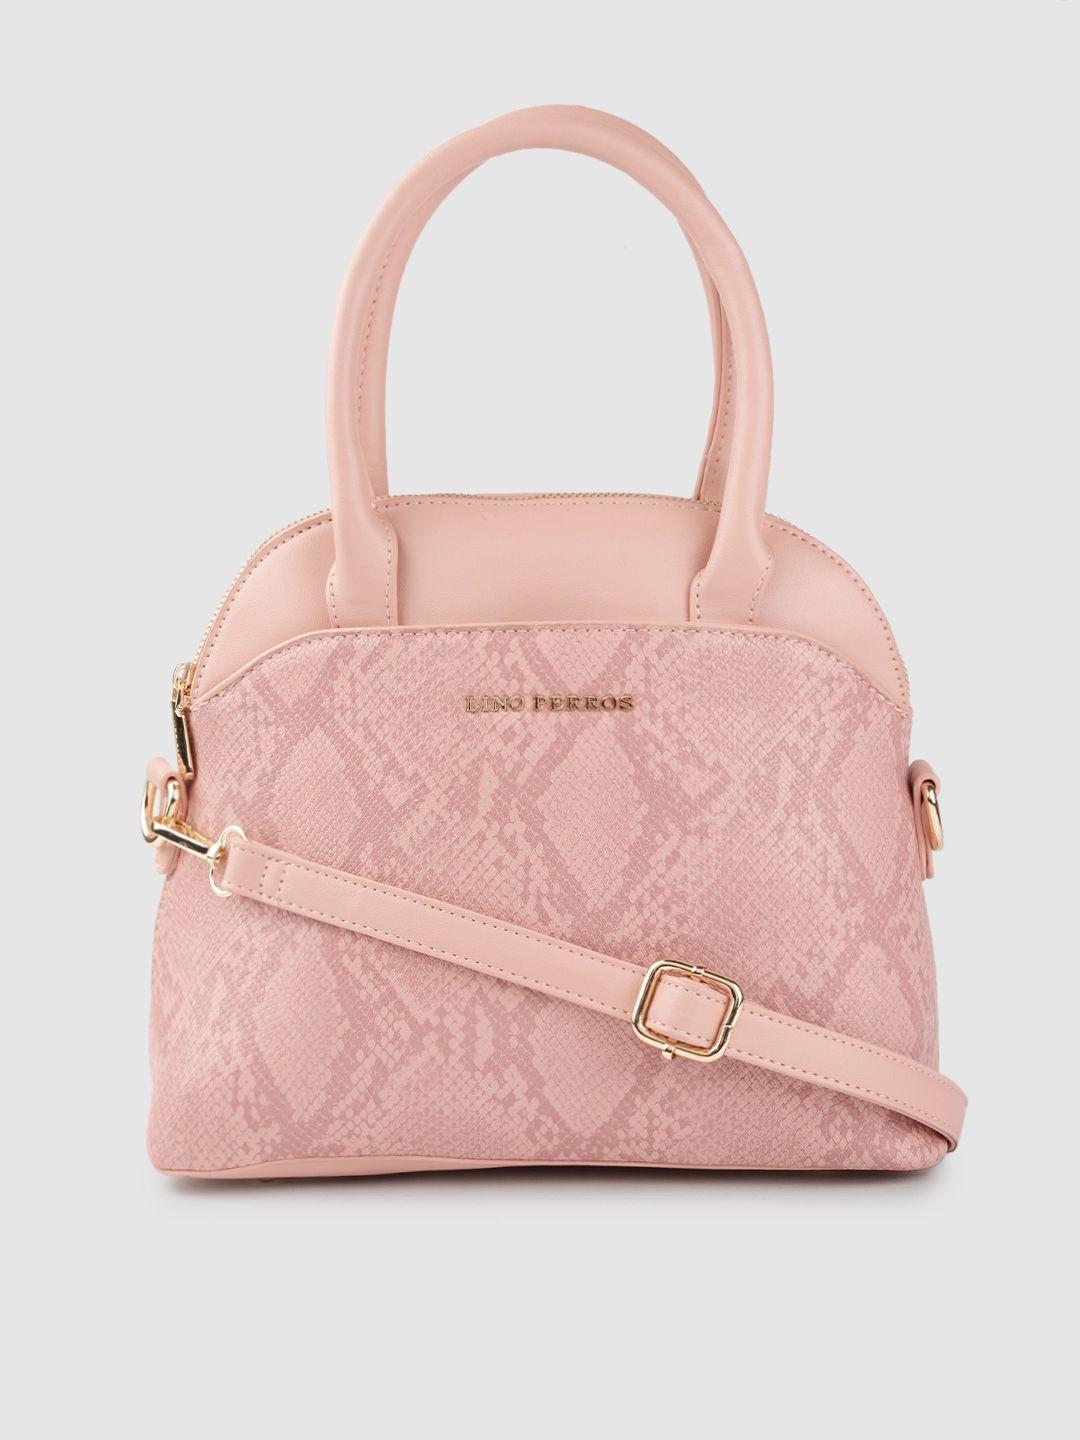 lino perros pink snakeskin textured handheld bag with detachable sling strap